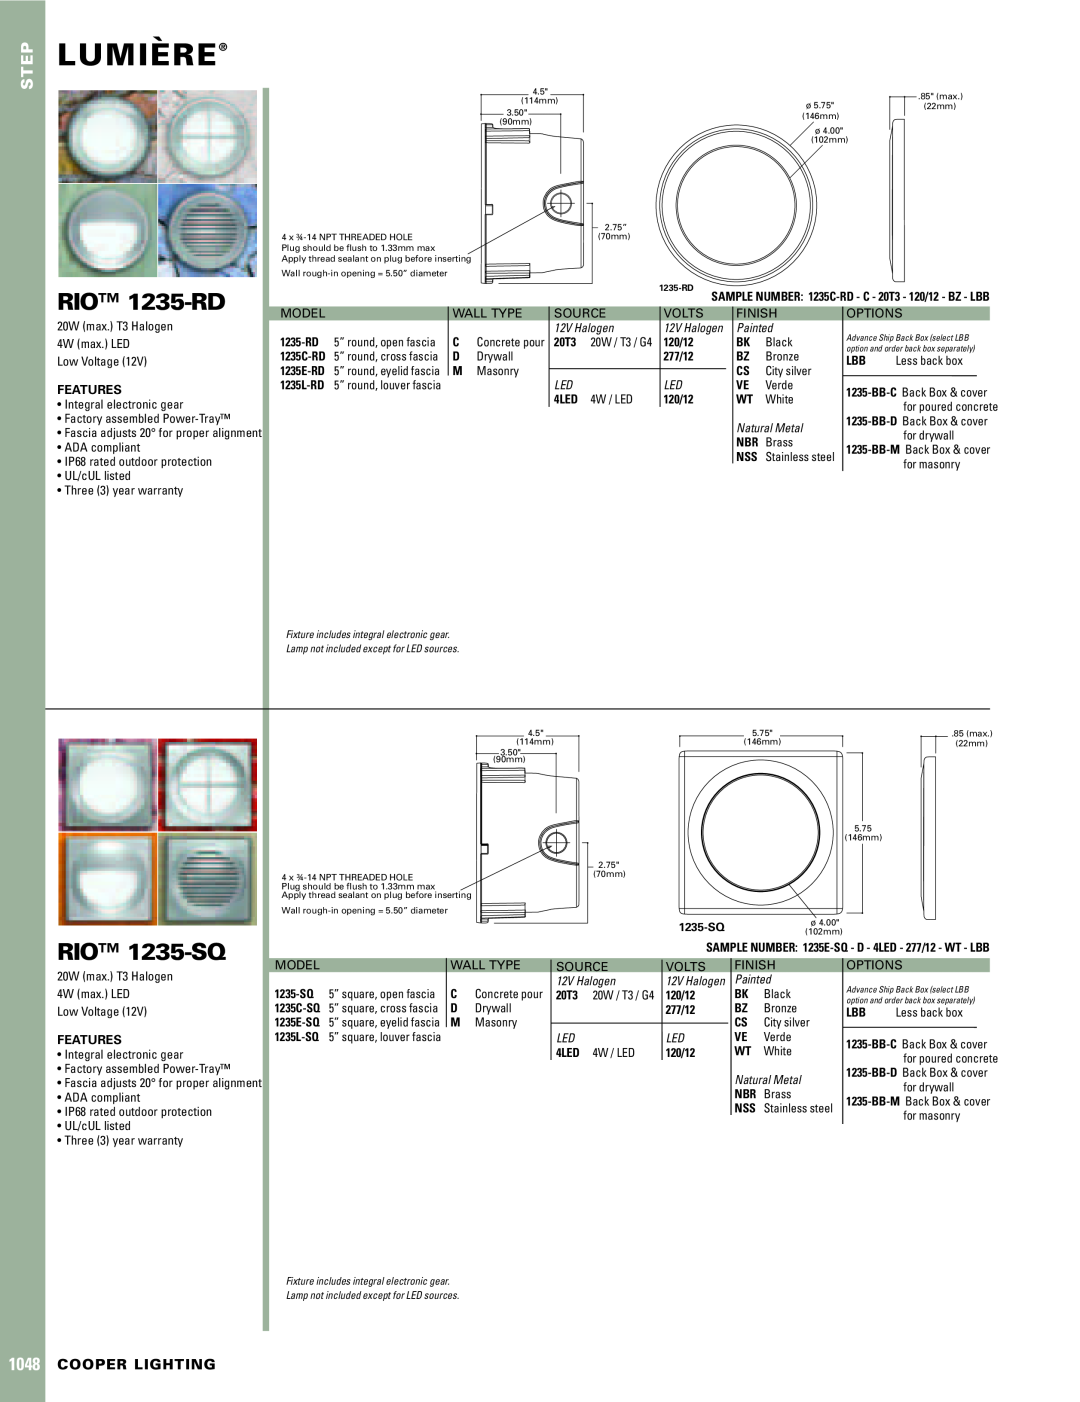 Cooper Lighting 1048 warranty Lumiere`, RIO 1235-RD, RIO 1235-SQ, Step, Cooper Lighting, 12V Halogen, Painted 